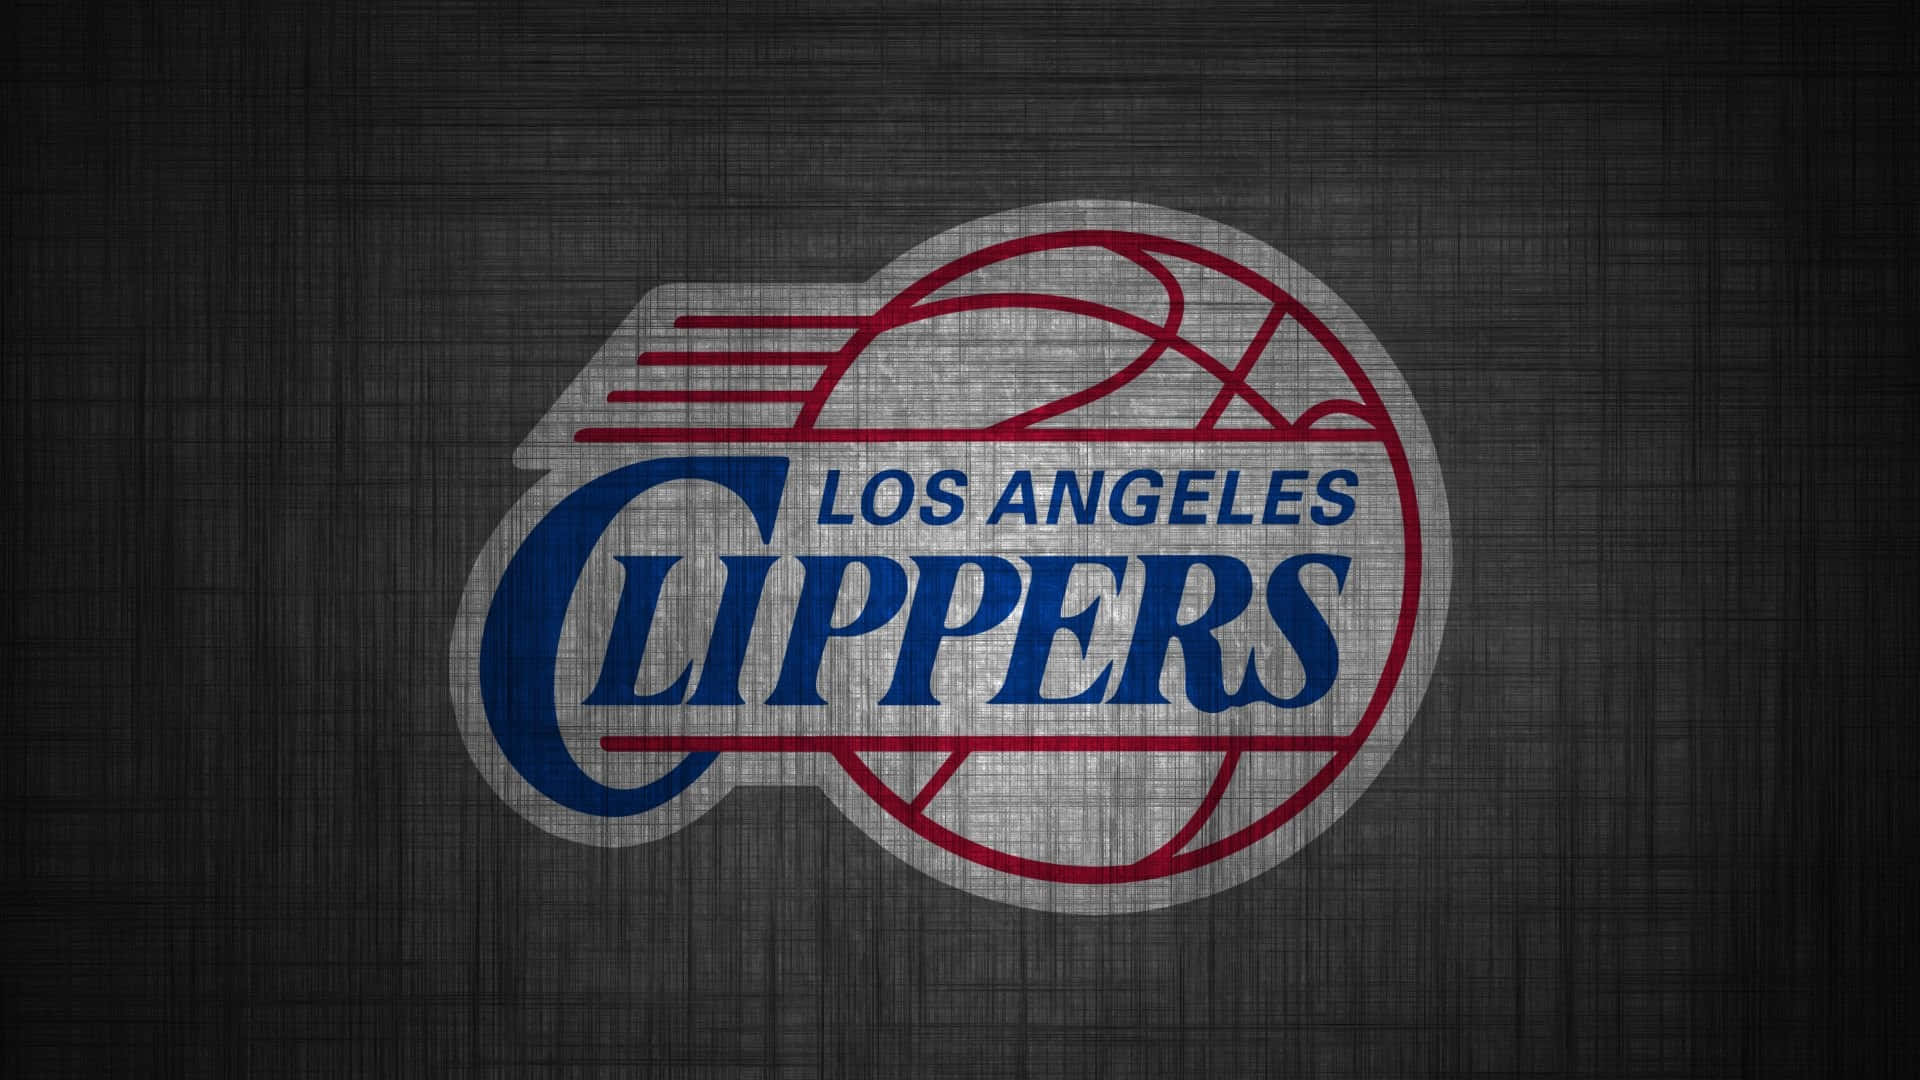 Basketball Team La Clippers Dark Illustration Picture